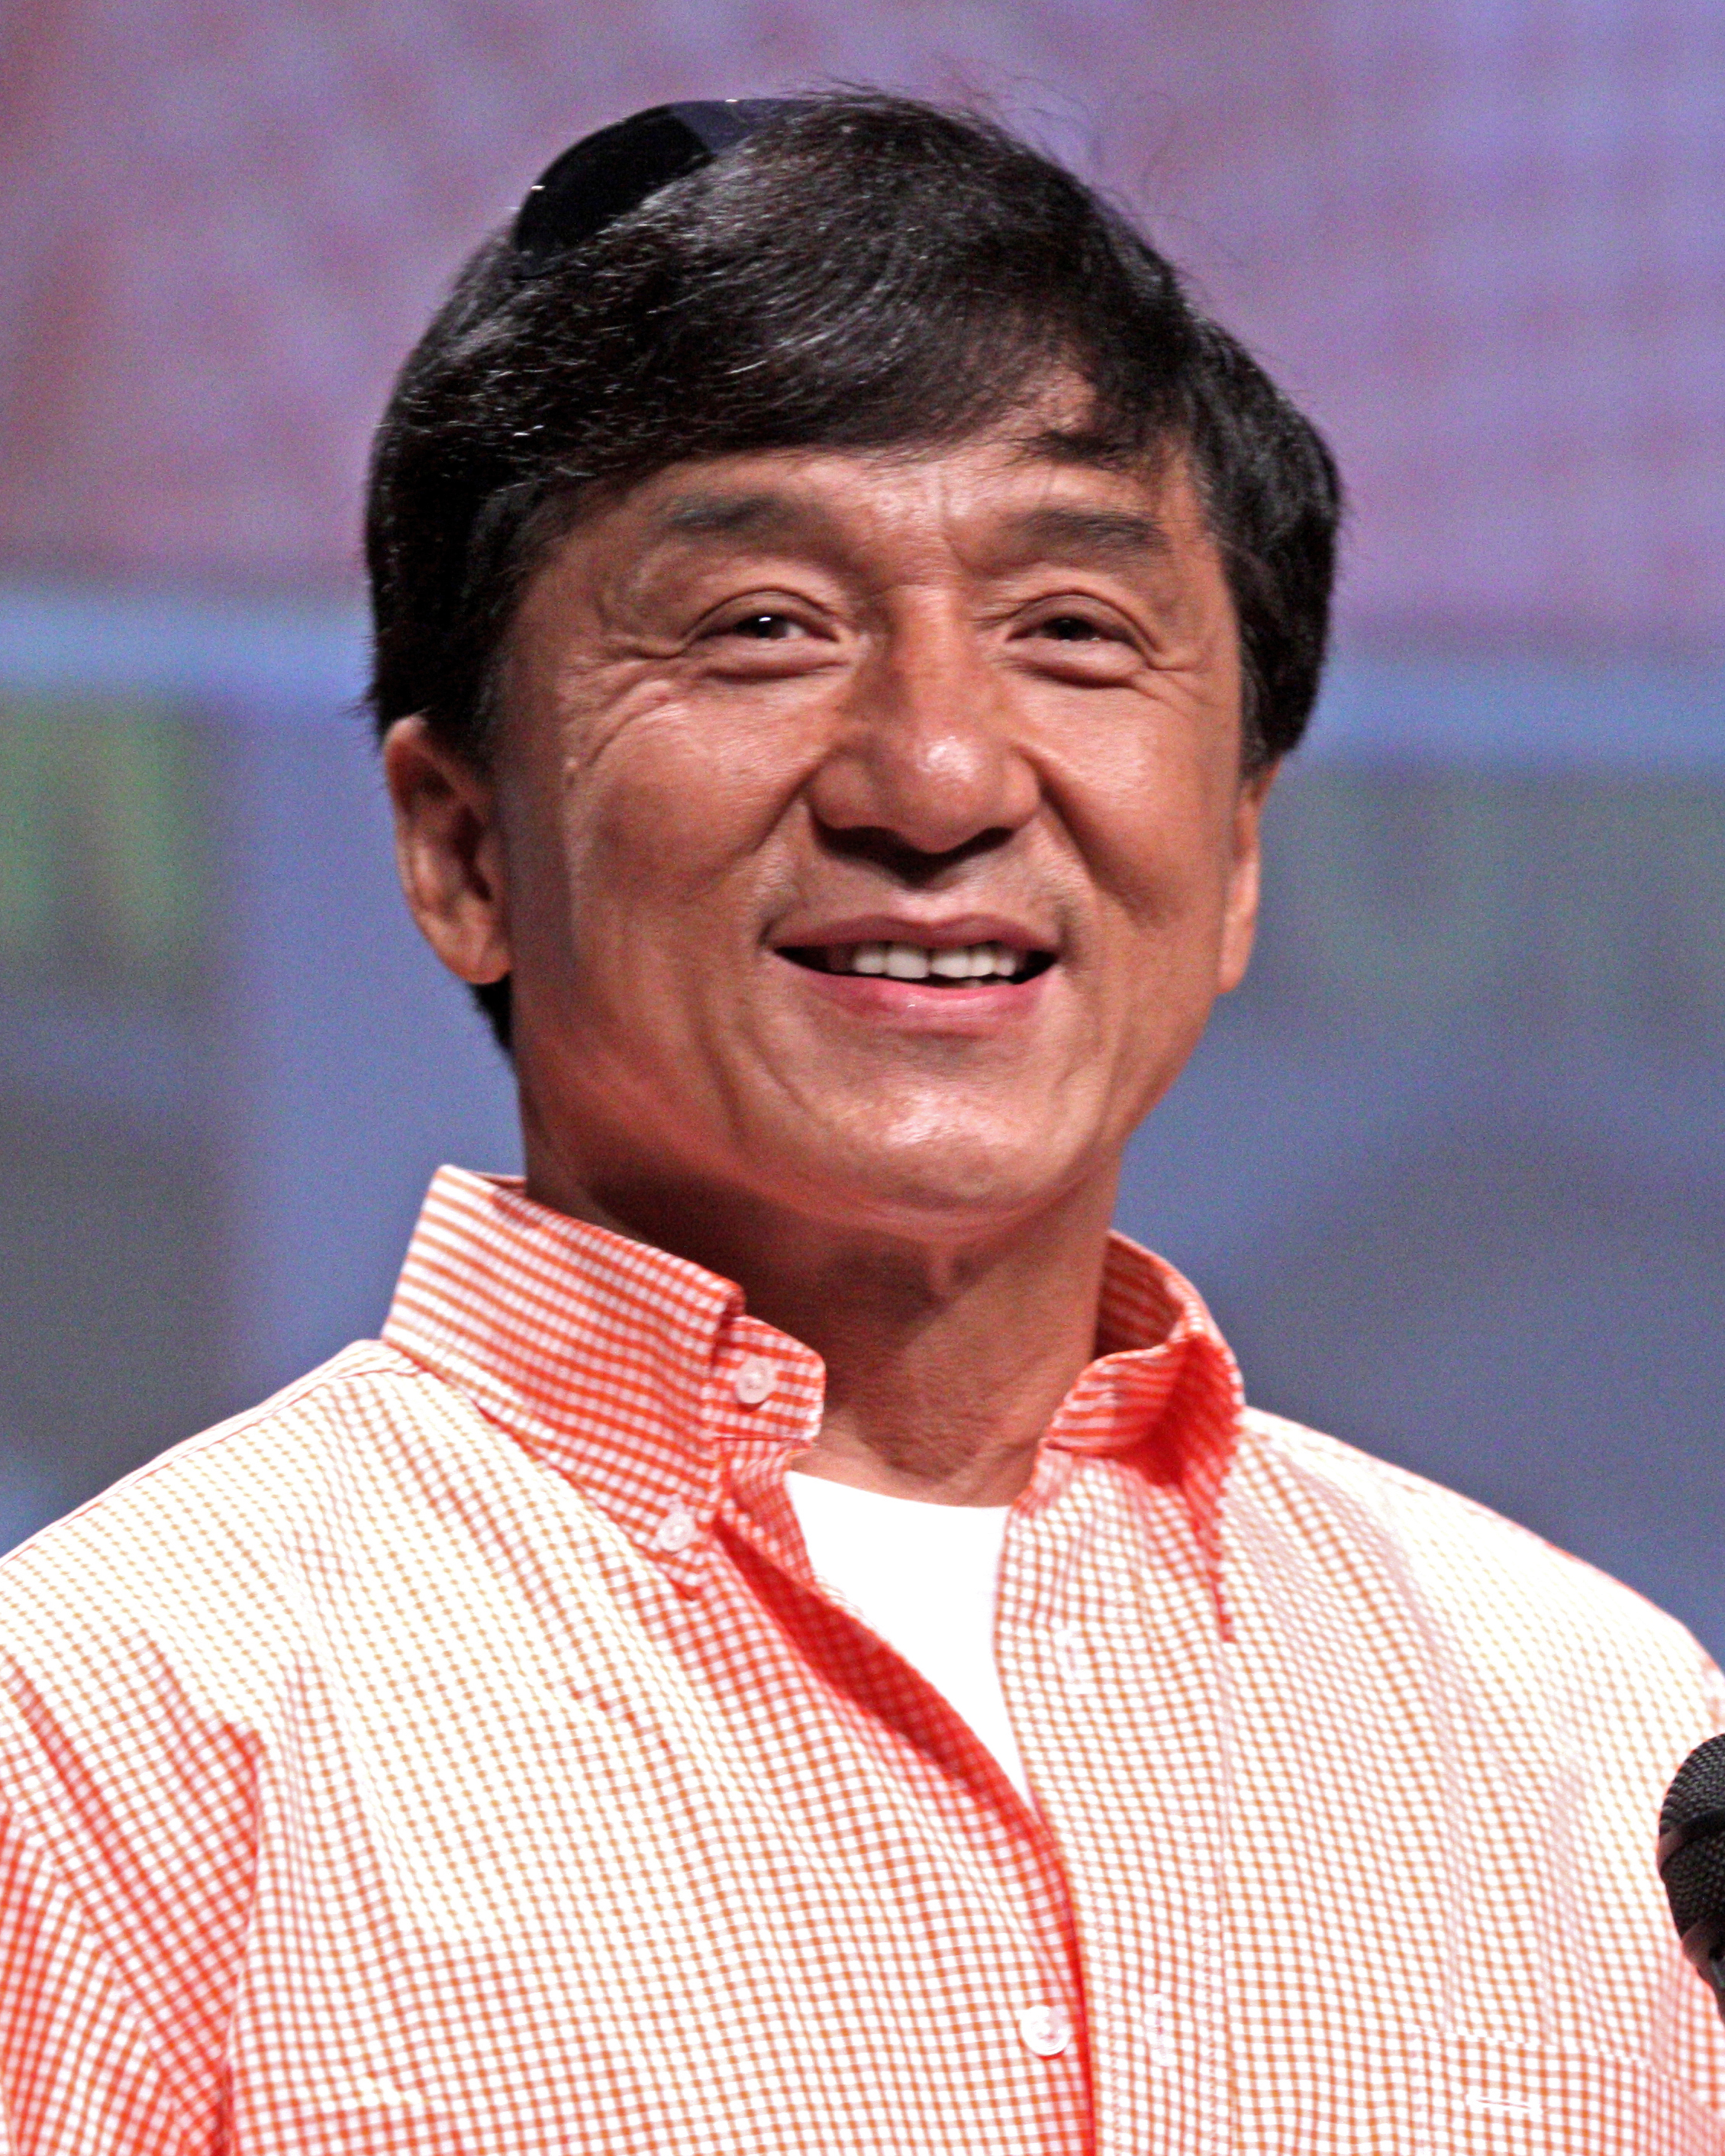 Jackie Chan photo #105230, Jackie Chan image